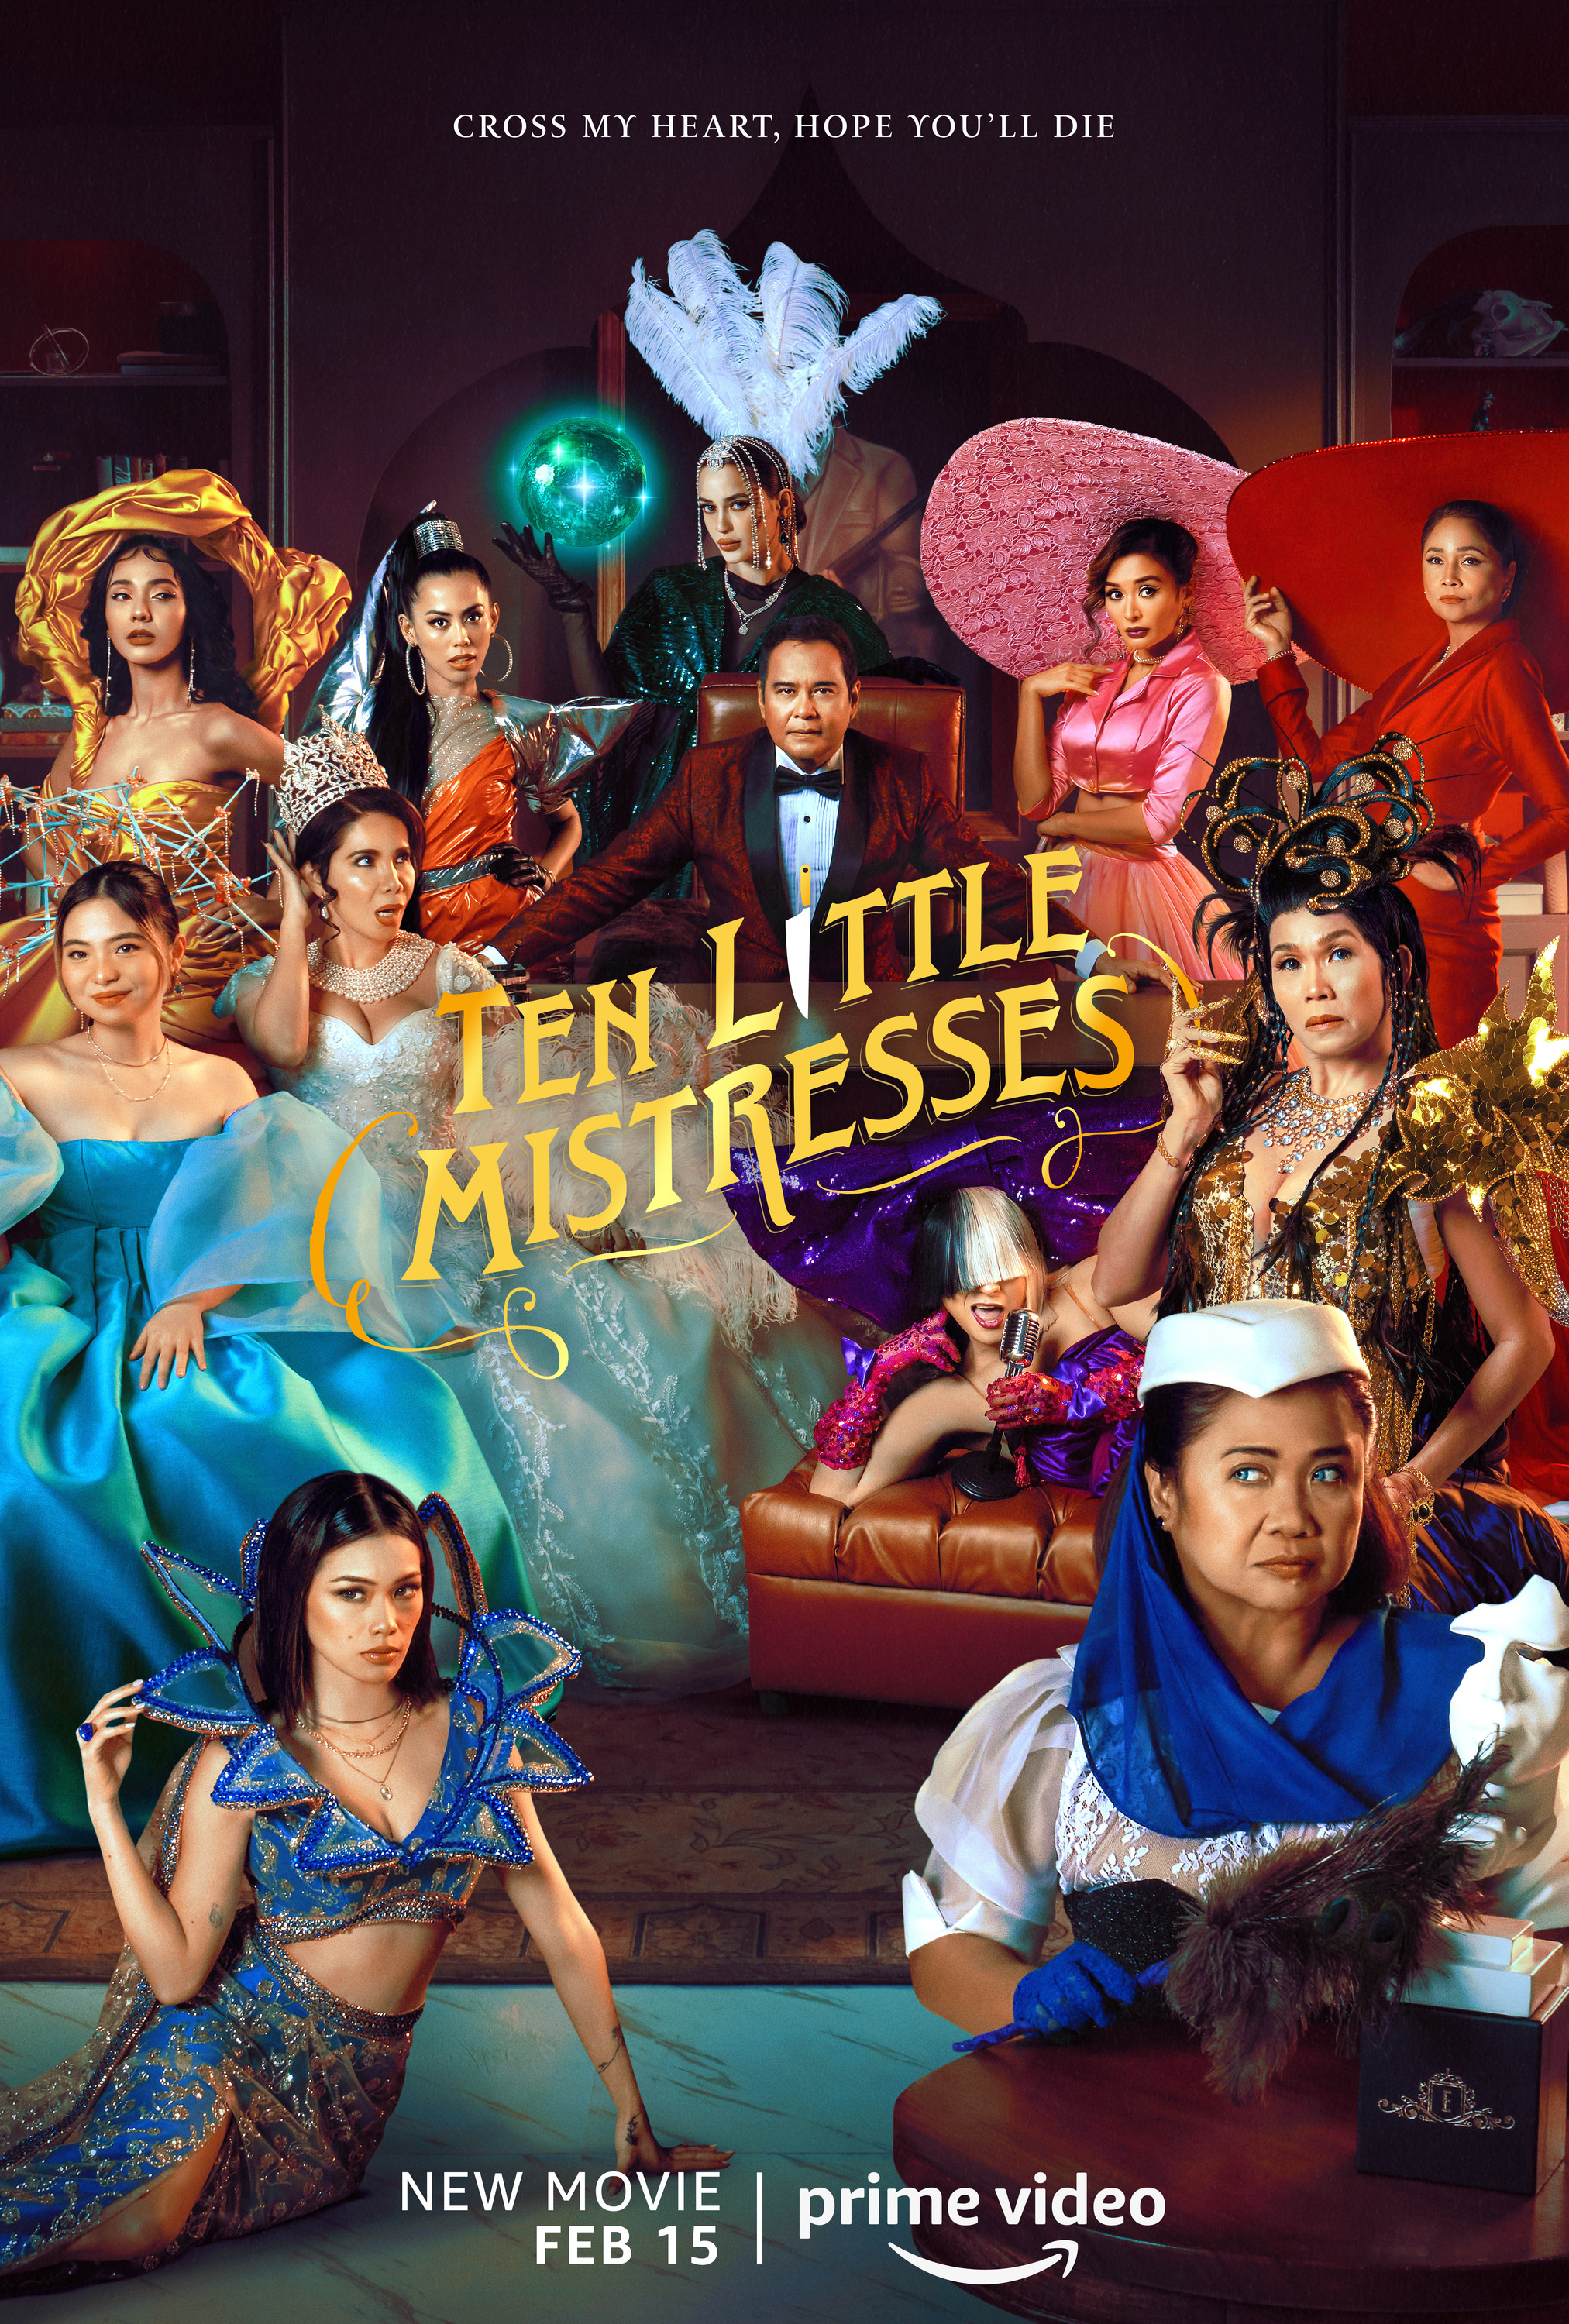 Mega Sized Movie Poster Image for Ten Little Mistresses (#13 of 14)